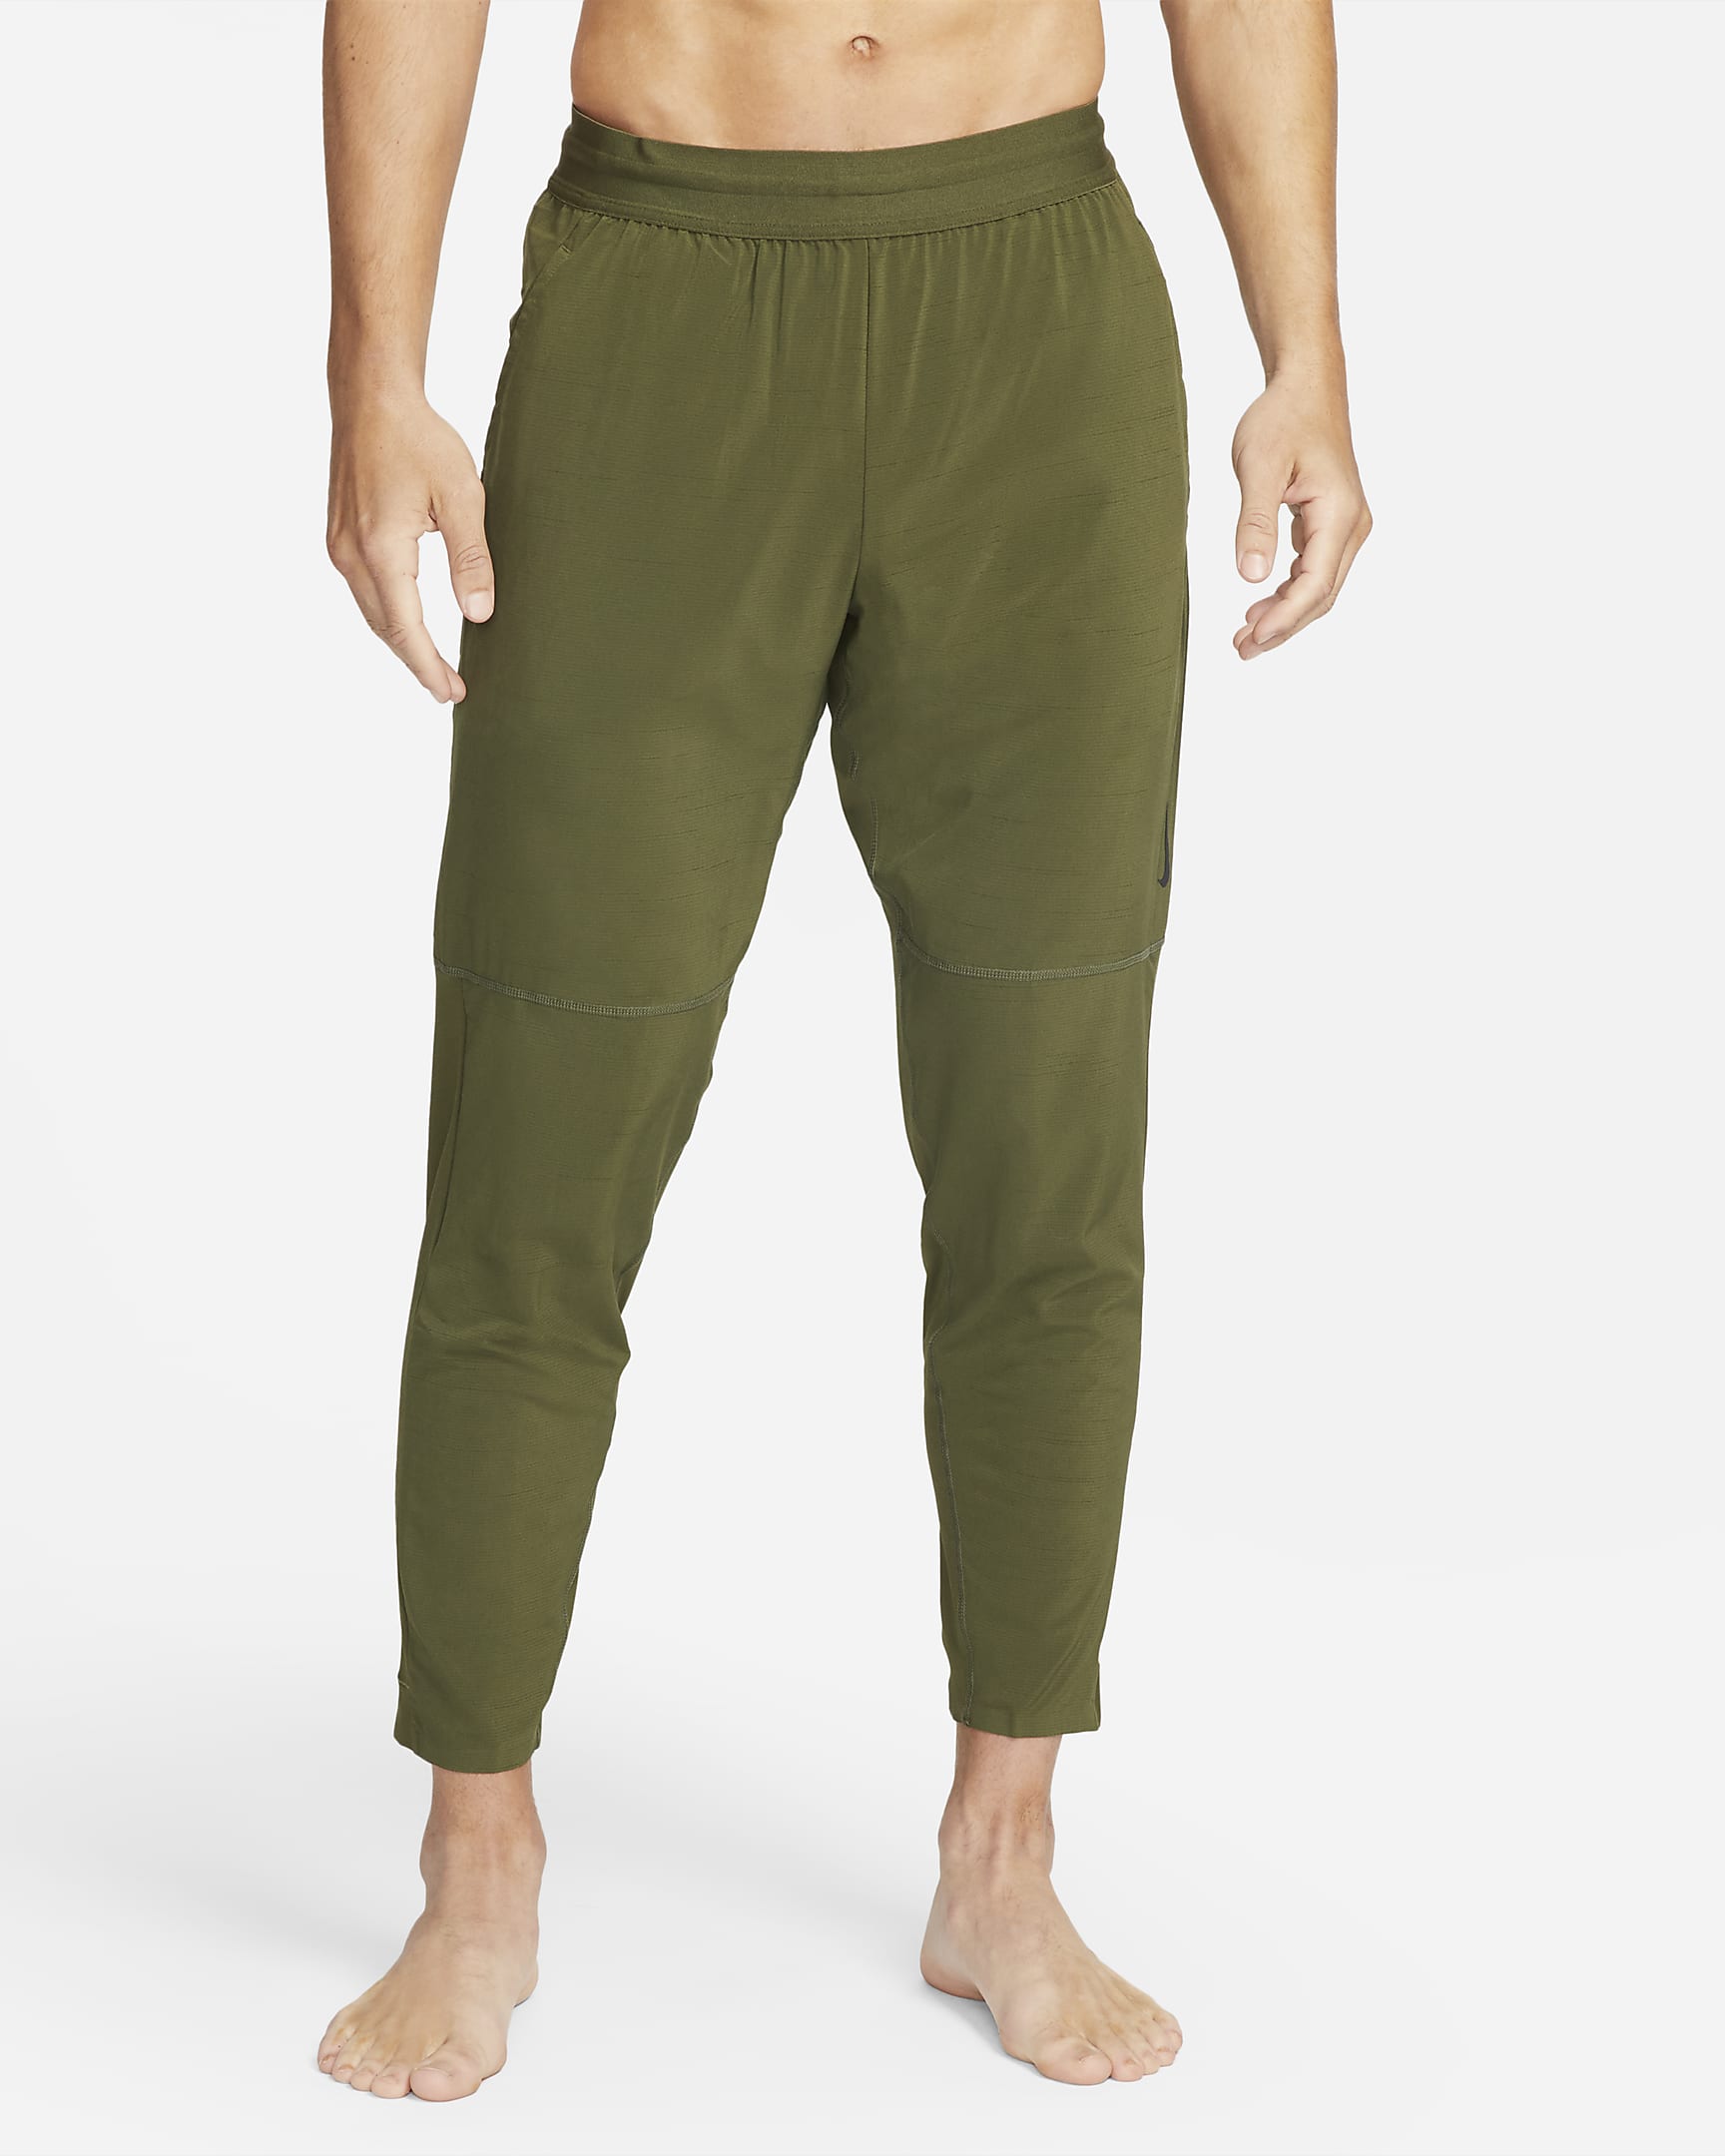 Nike Yoga Men\'s Pants Rough Green/Black